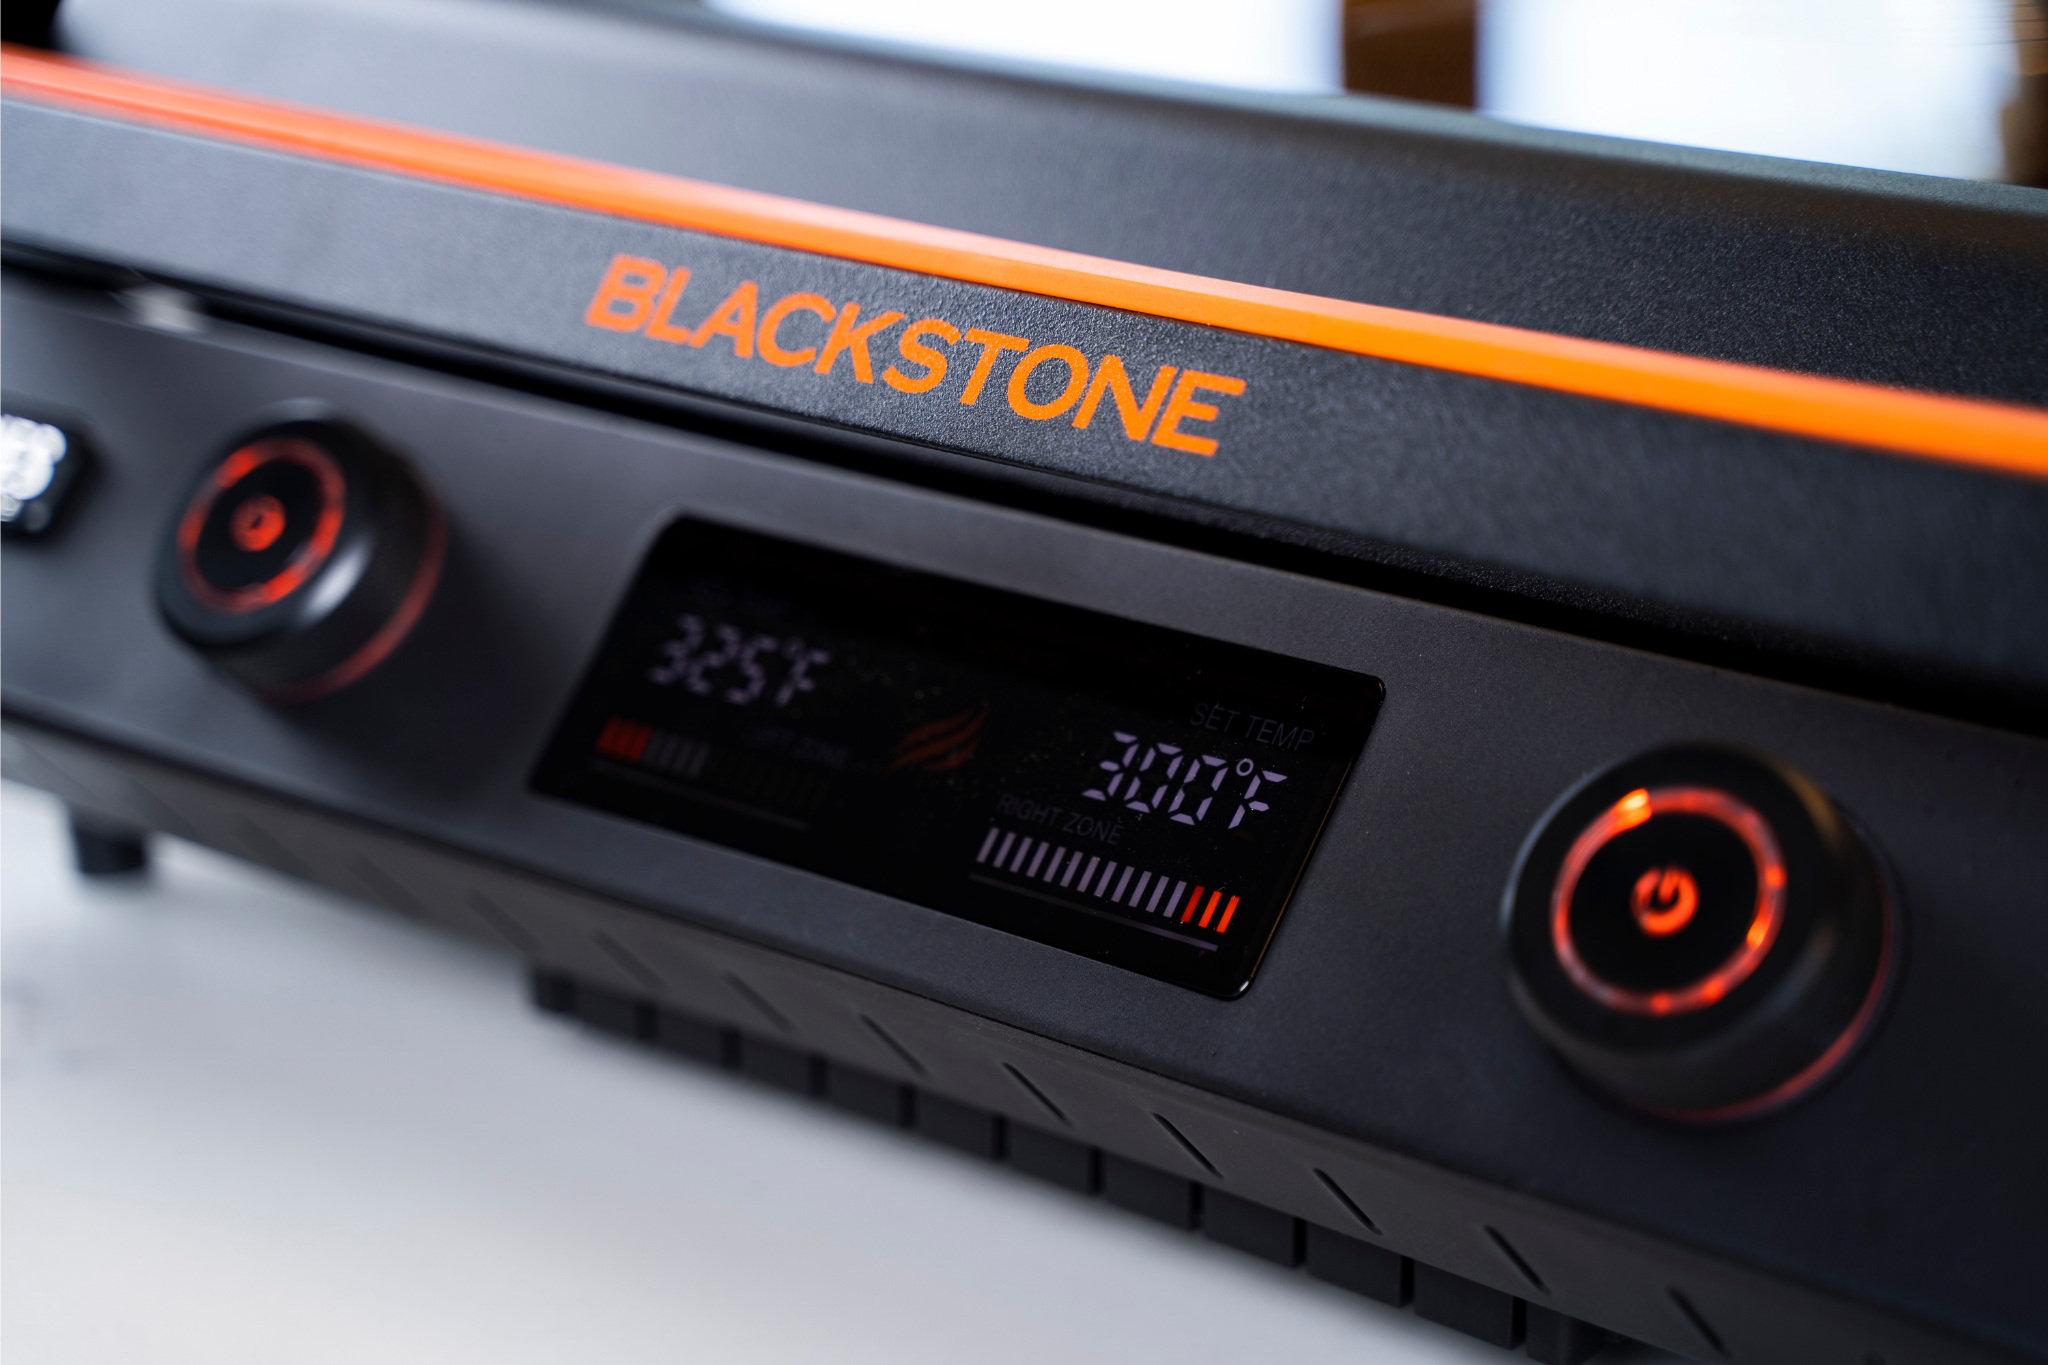 Blackstone - 22" Electric Tabletop Griddle - 8001